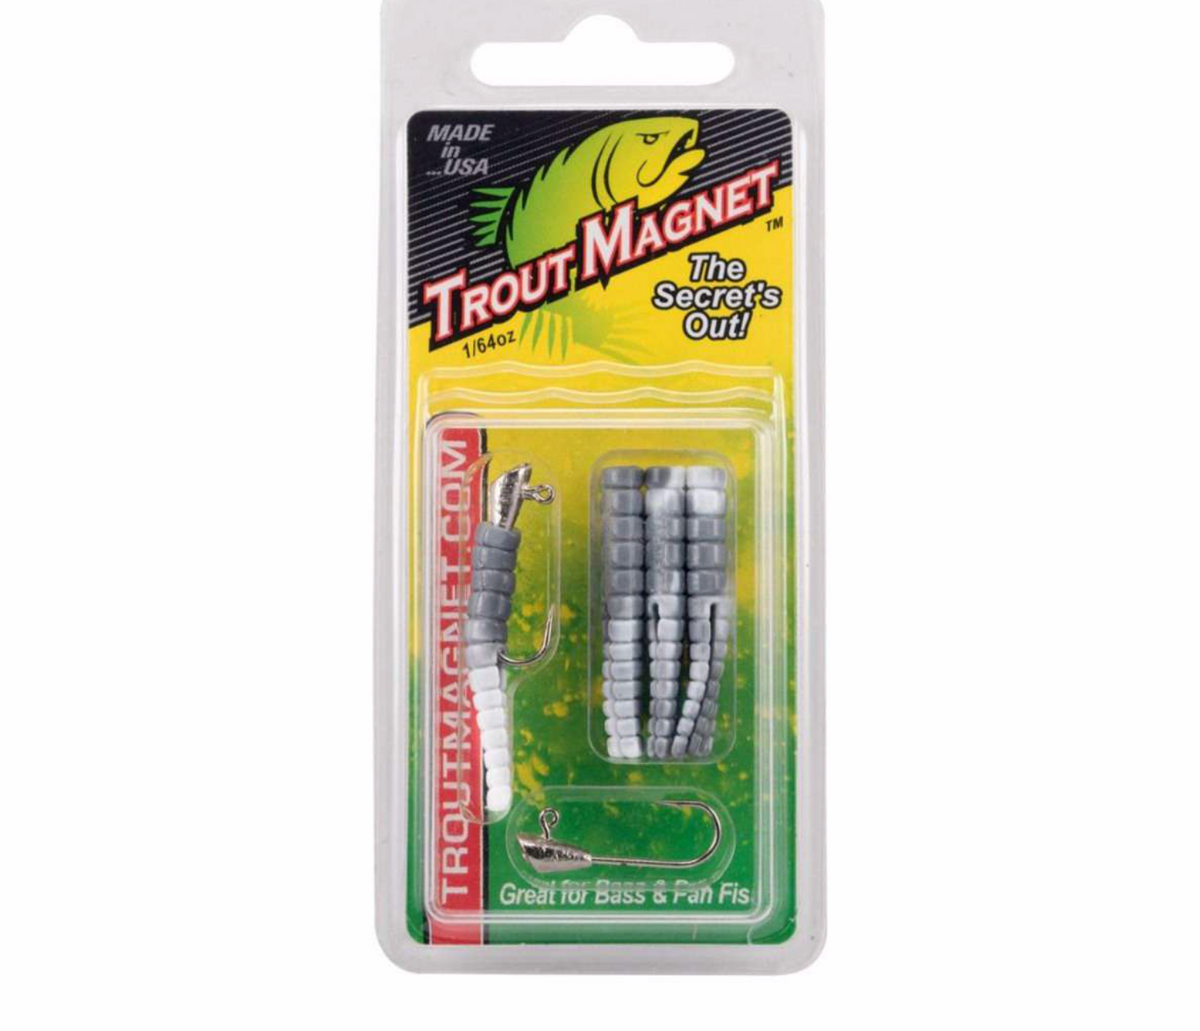 Leland Trout Magnet (9 pk) - Angler's Headquarters